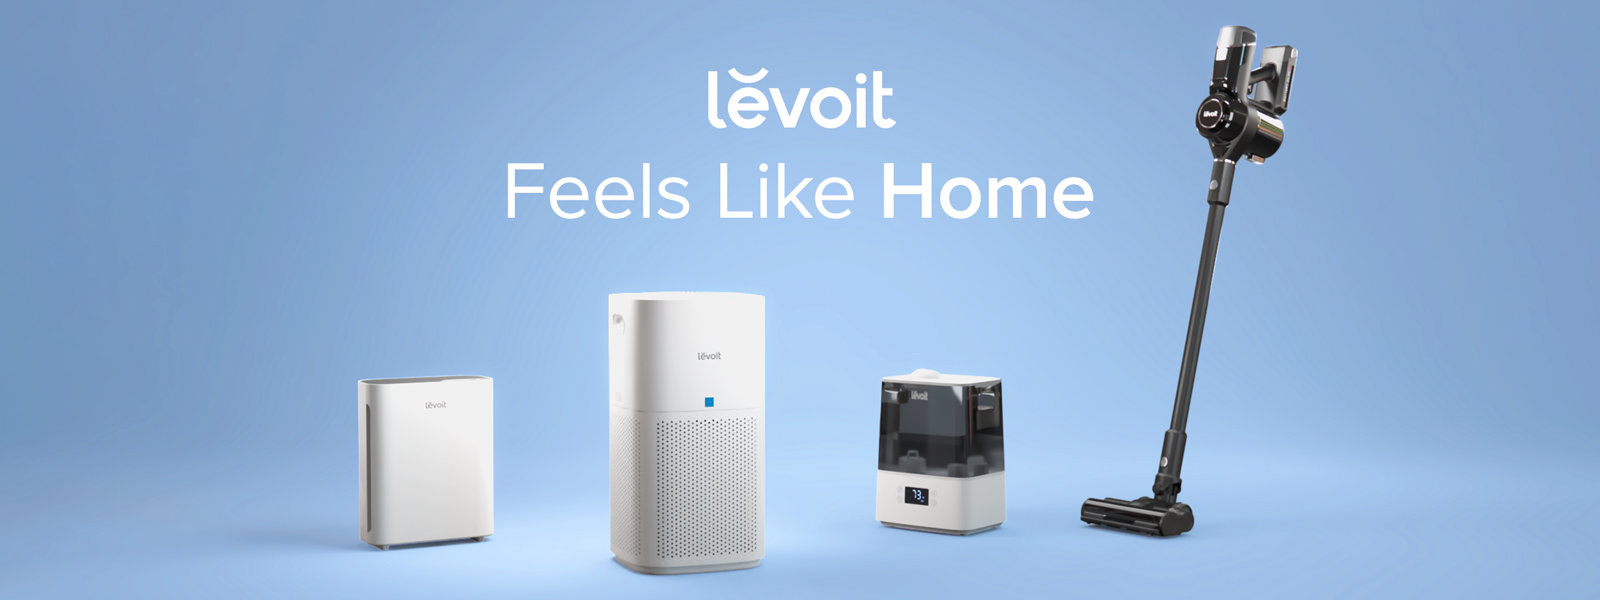 LEVOIT Air Purifiers For Bedroom Home, HEPA Filter Cleaner With Fragrance  Sponge For Better Sleep, Filters Smoke, Allergies, Pet Dander, Odor, Dust,  Office, Desktop, Portable, Core Mini, Black